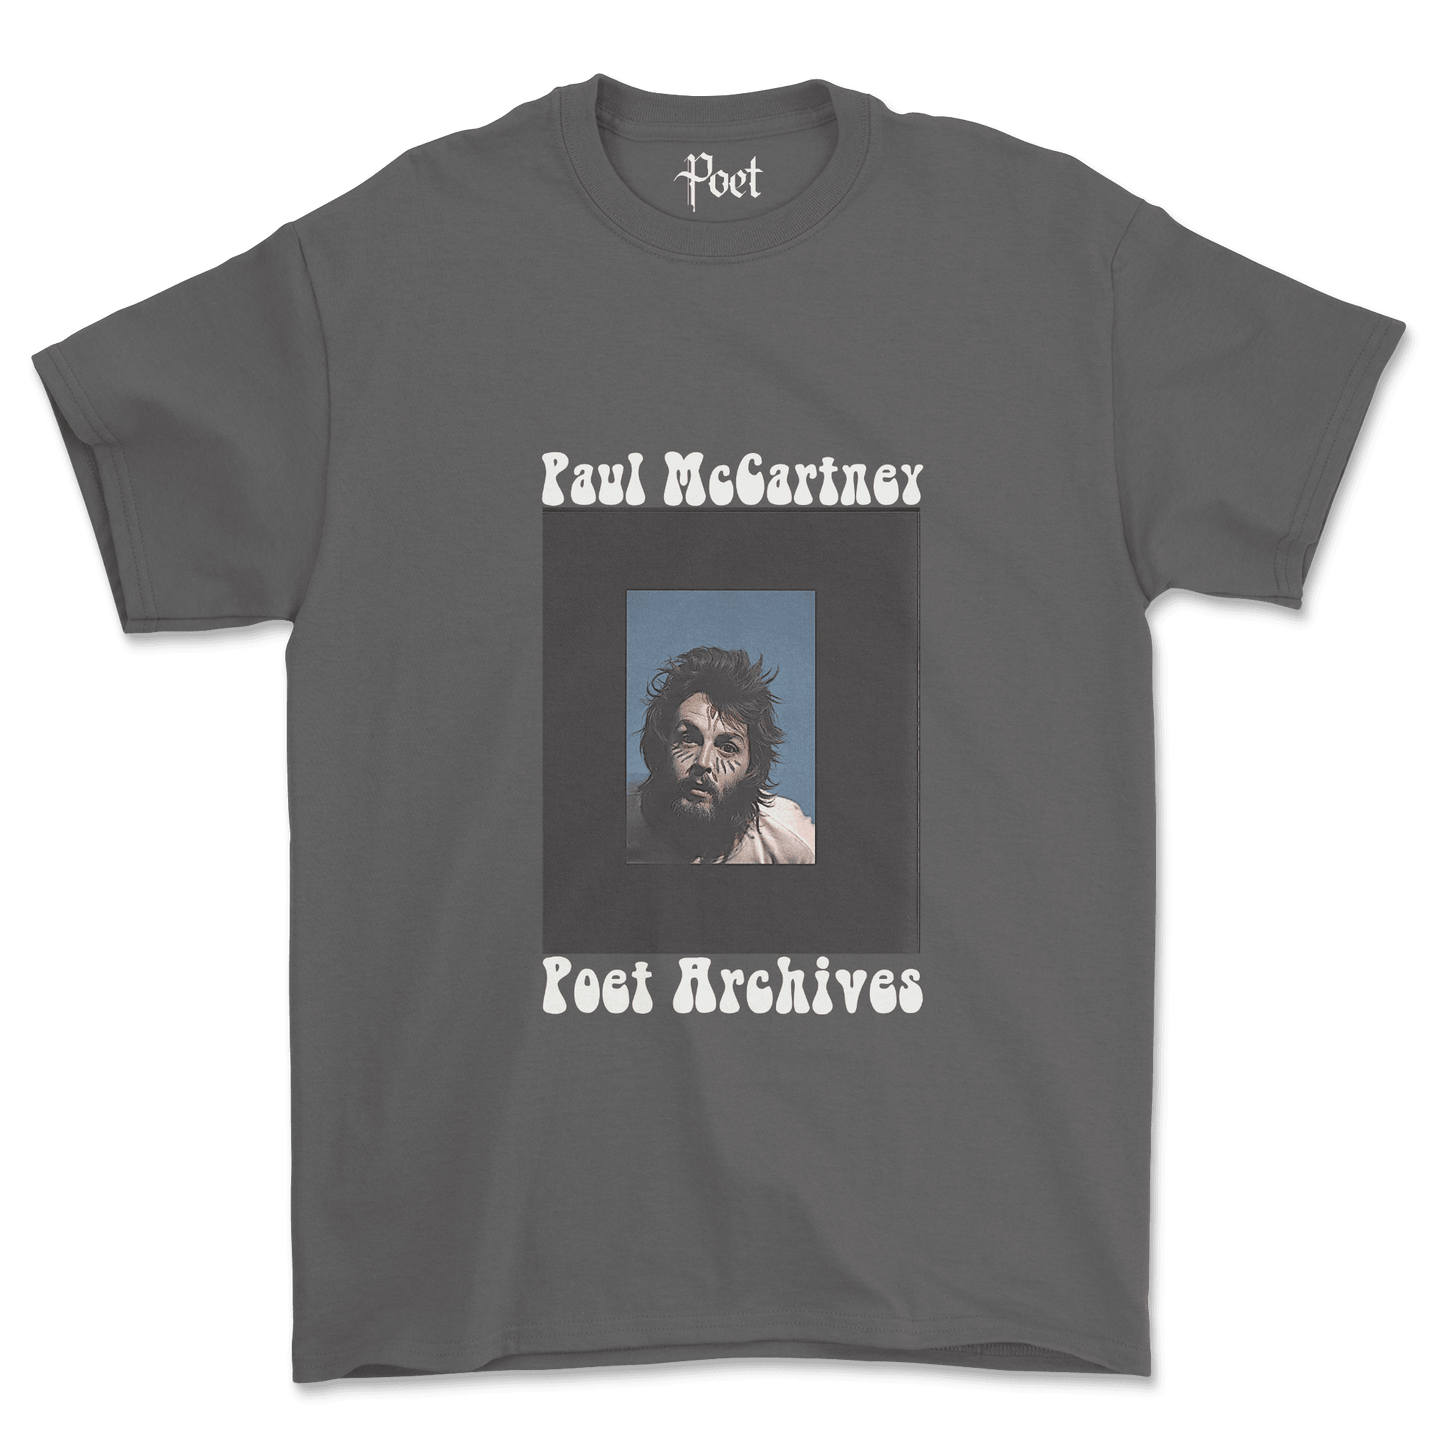 Paul McCartney T-Shirt - Poet Archives